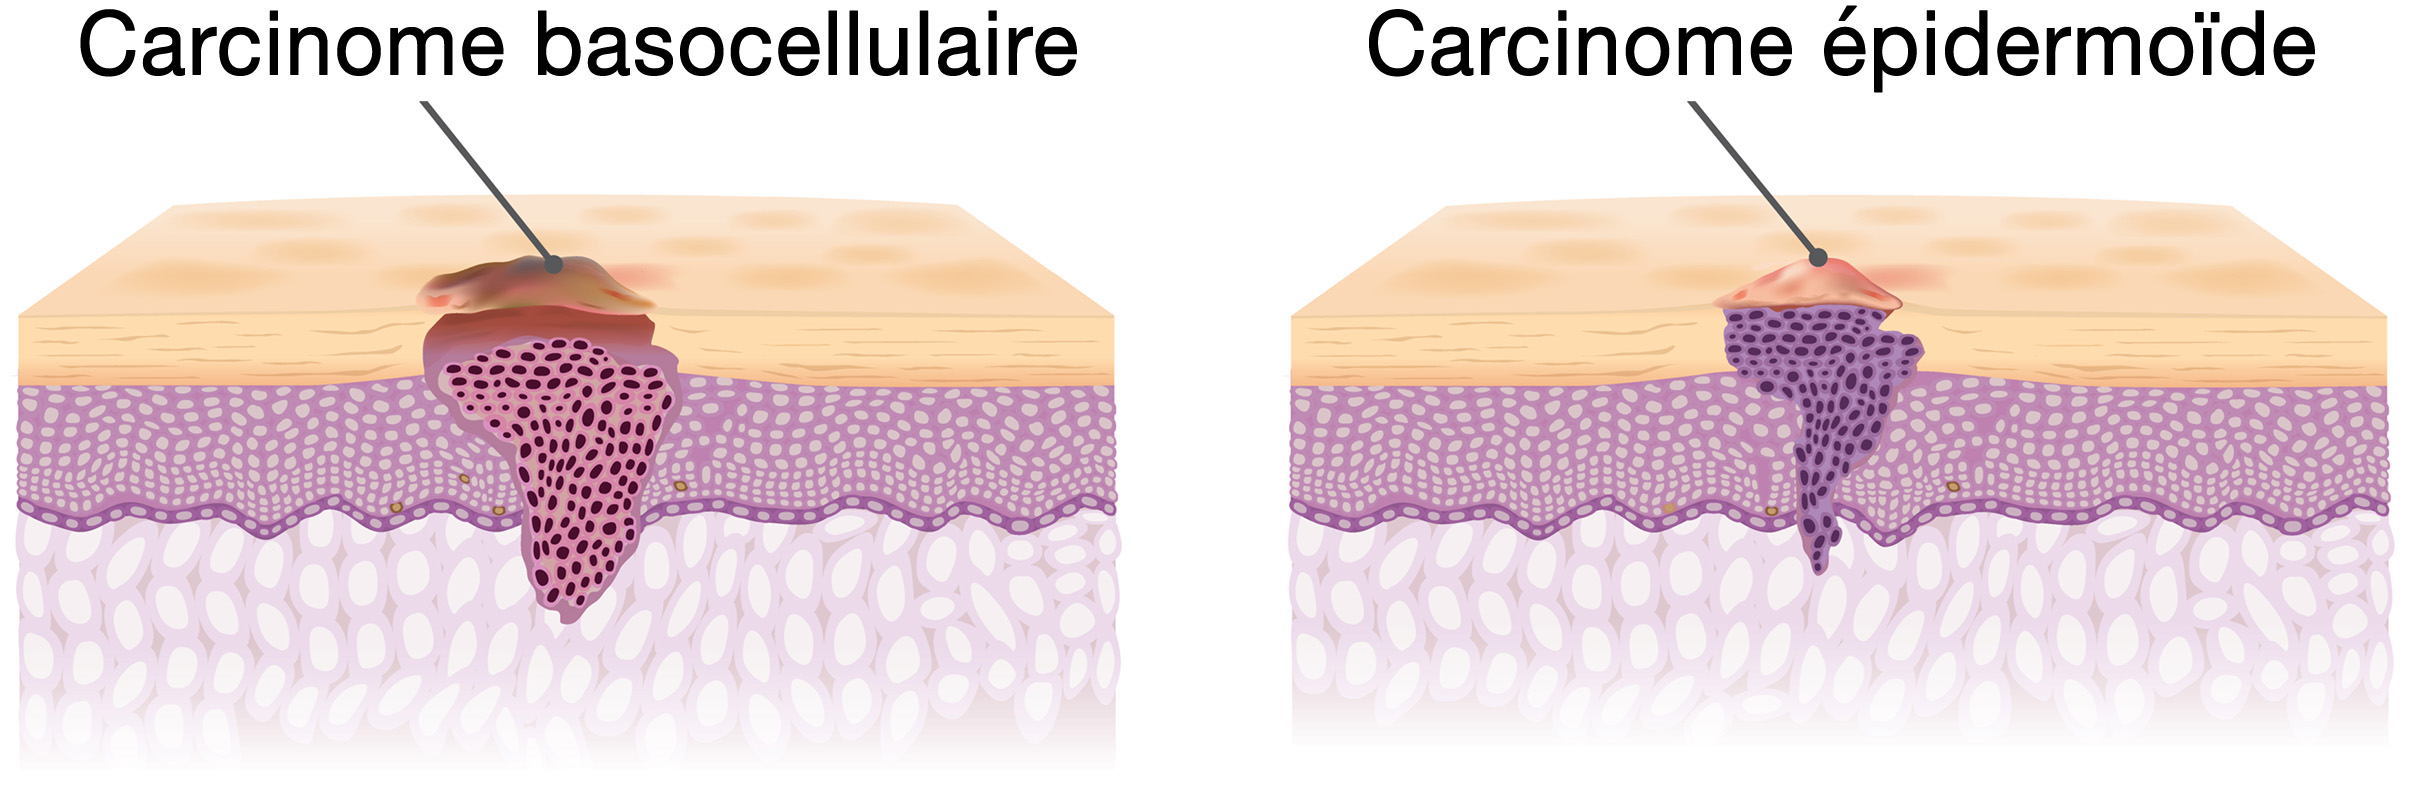 carcinome basocellulaire et carcinome épidermoïde